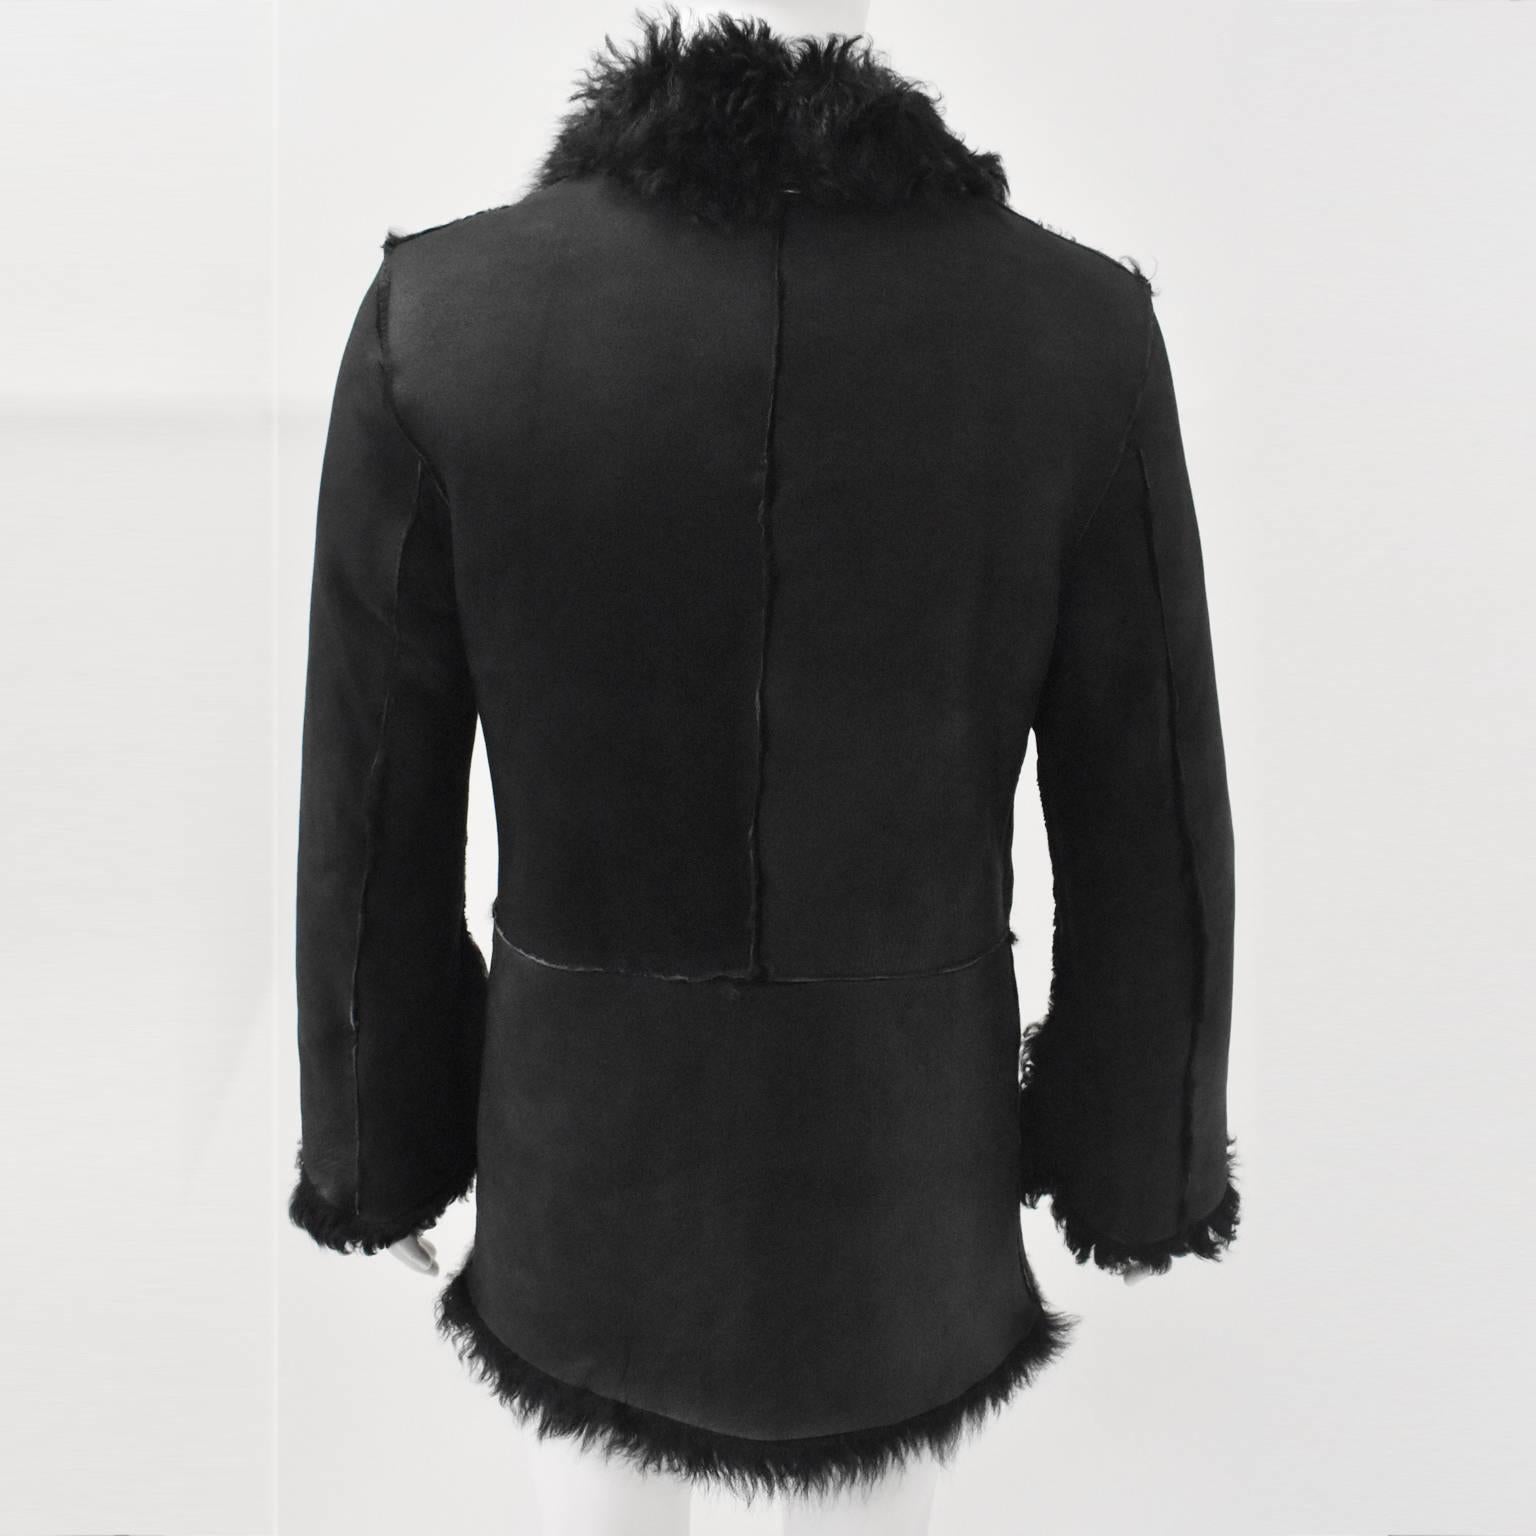 Unlabelled Belgian Black Shearling Coat 1